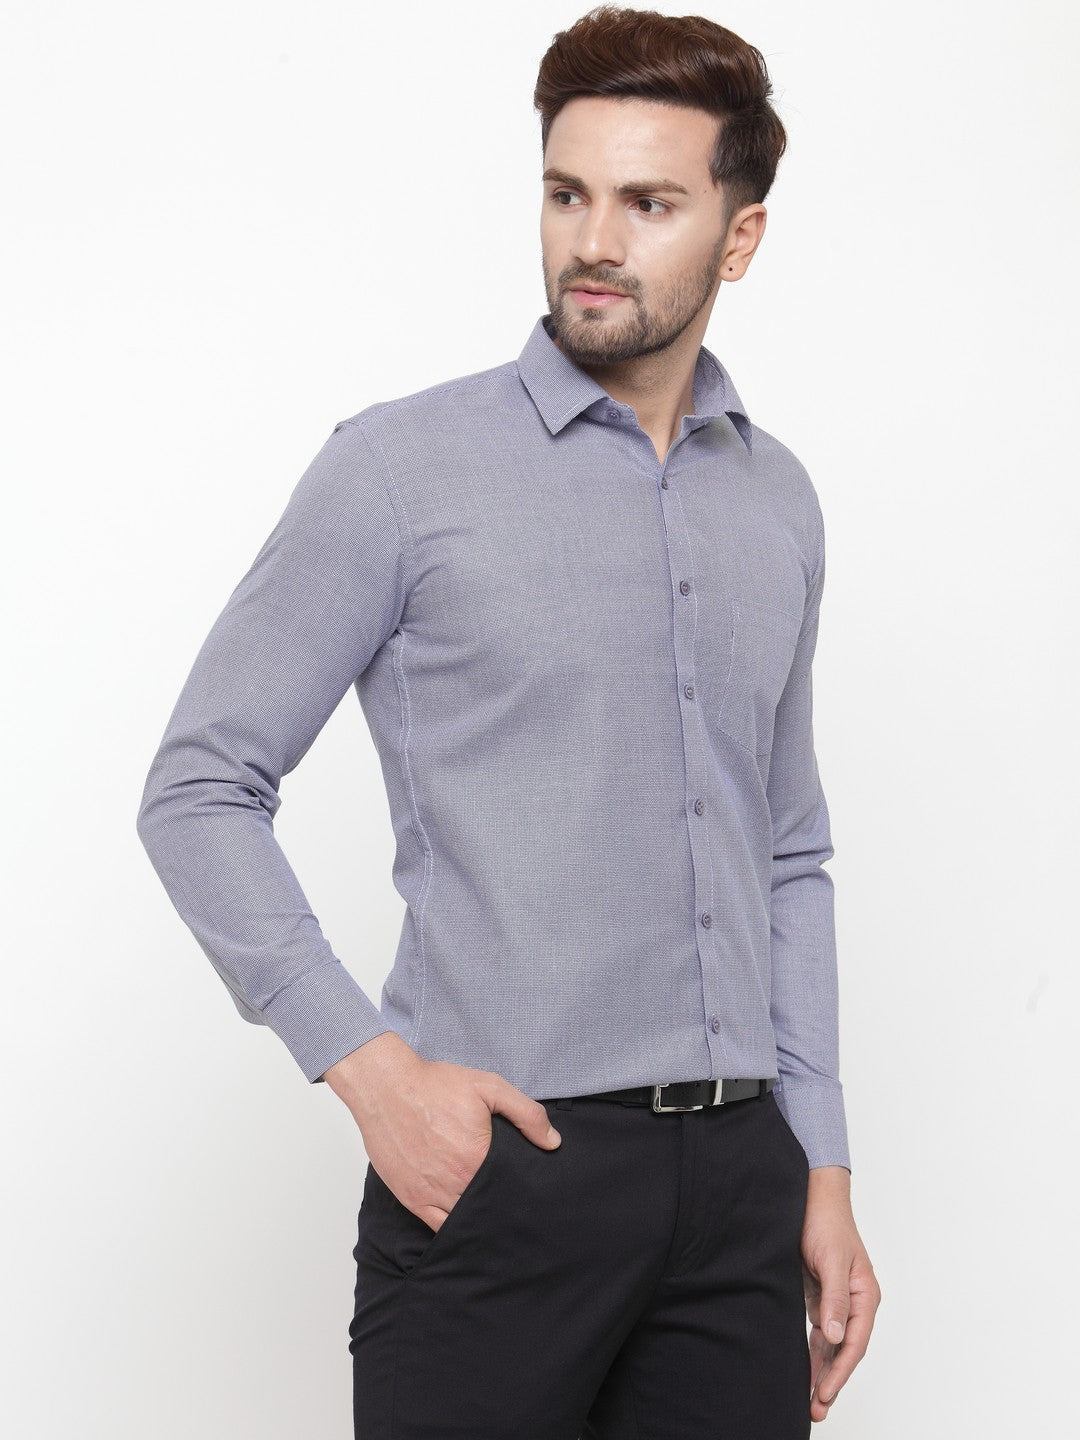 Men's Grey Cotton Geometric Formal Shirts ( SF 434Grey ) - Jainish